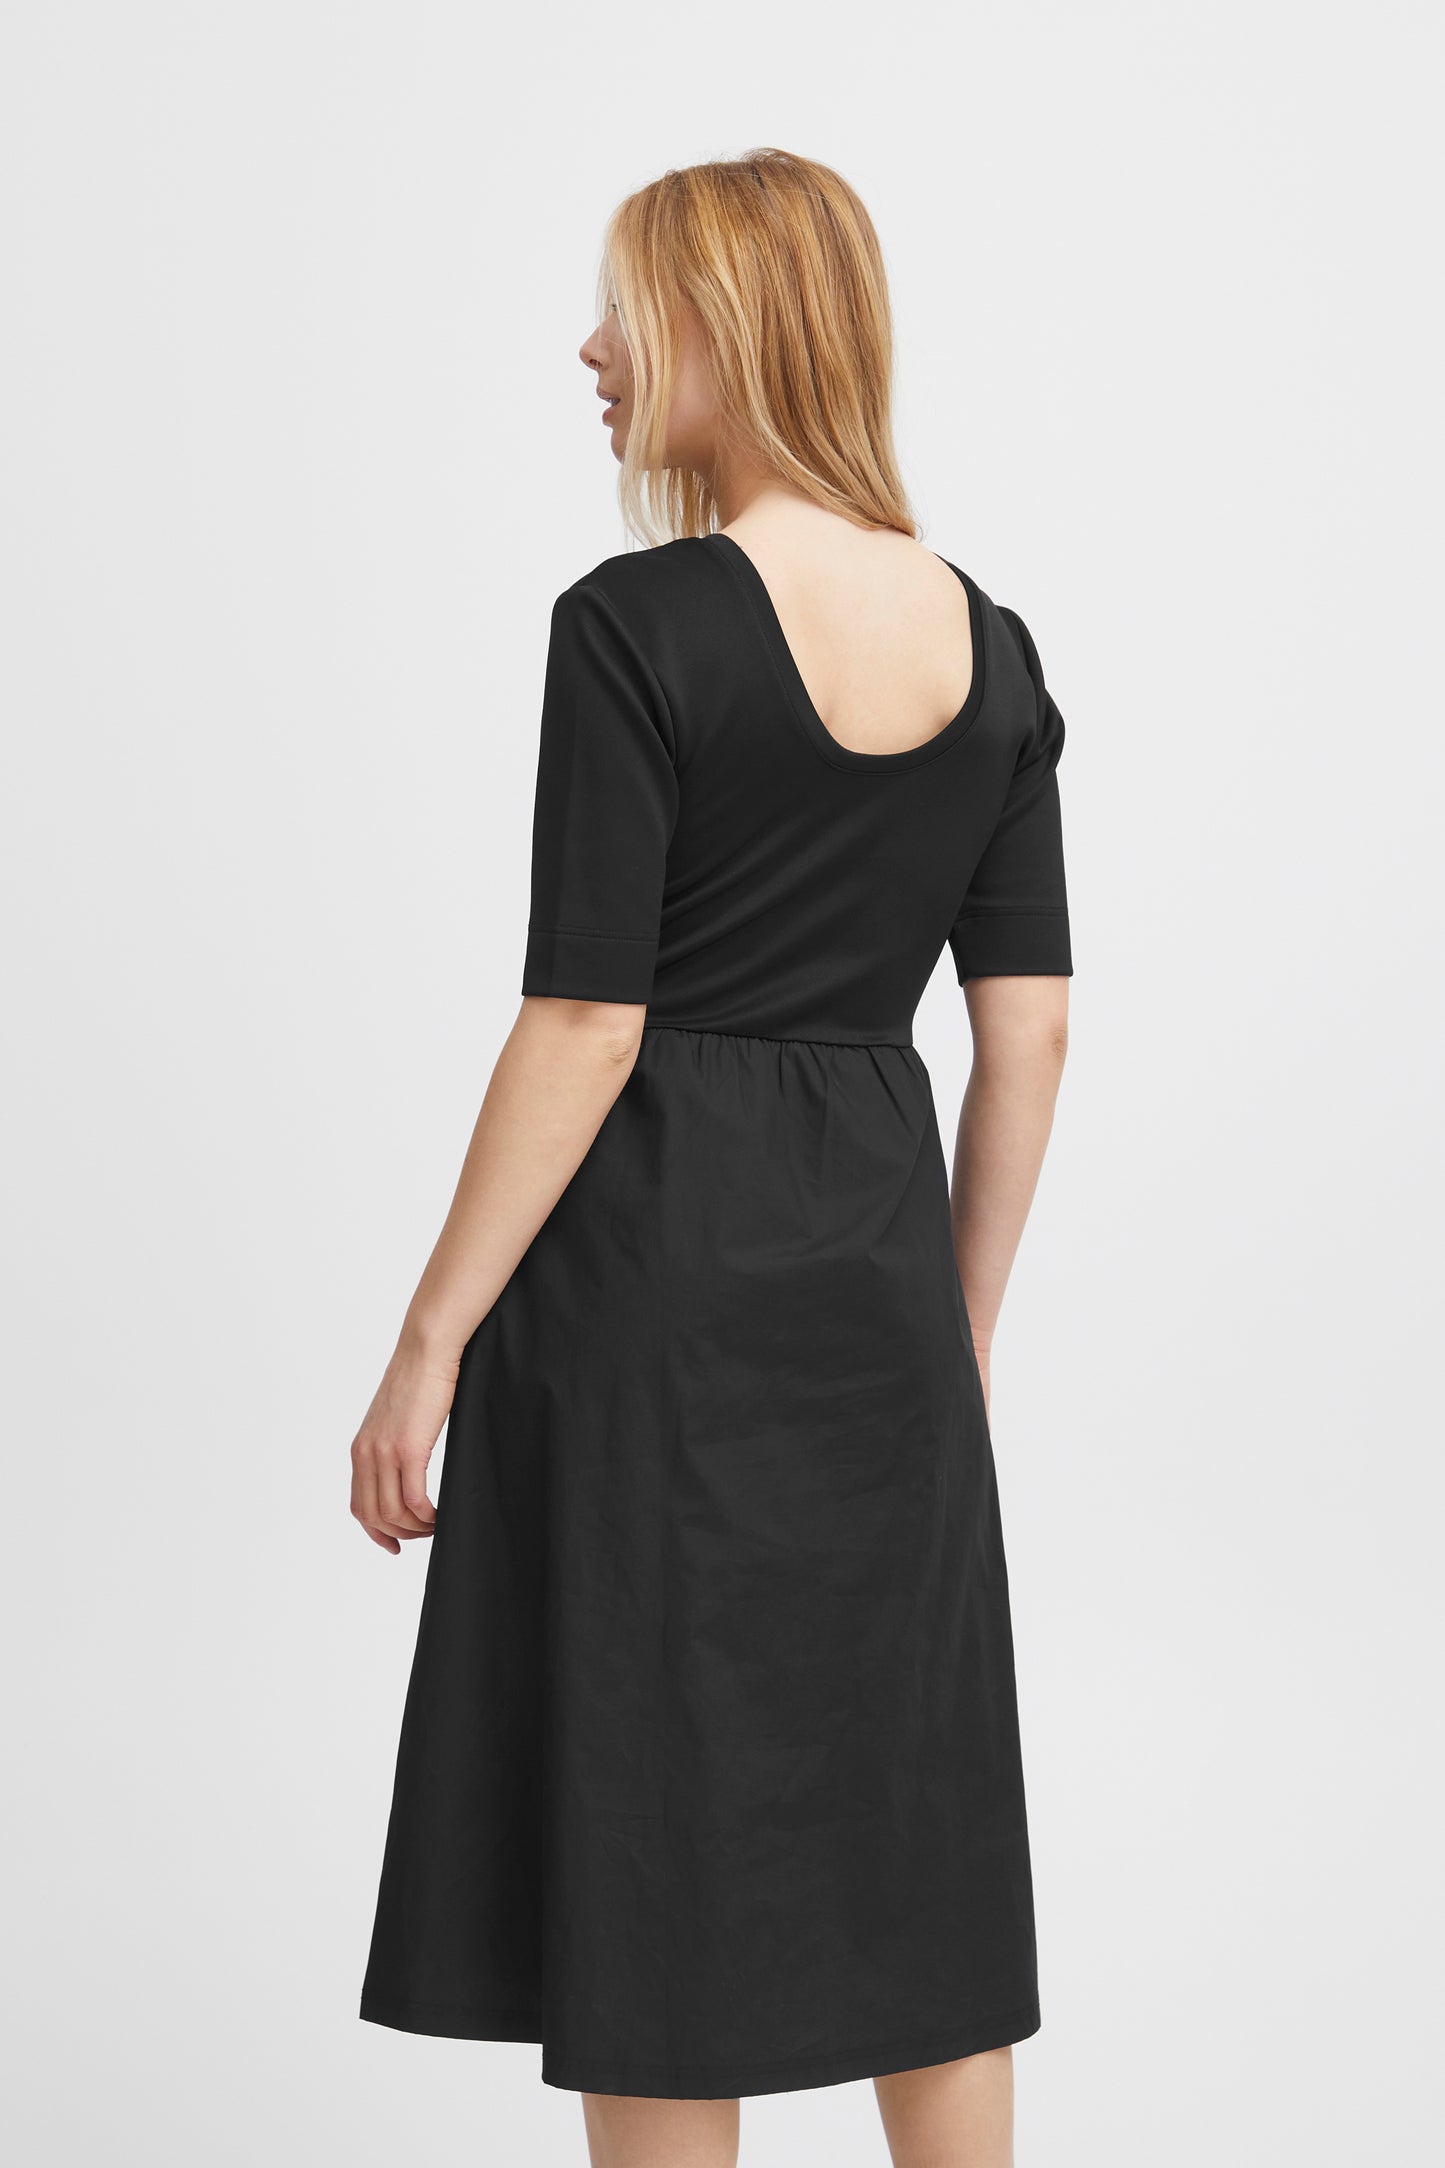 Byrini - Dress -Black